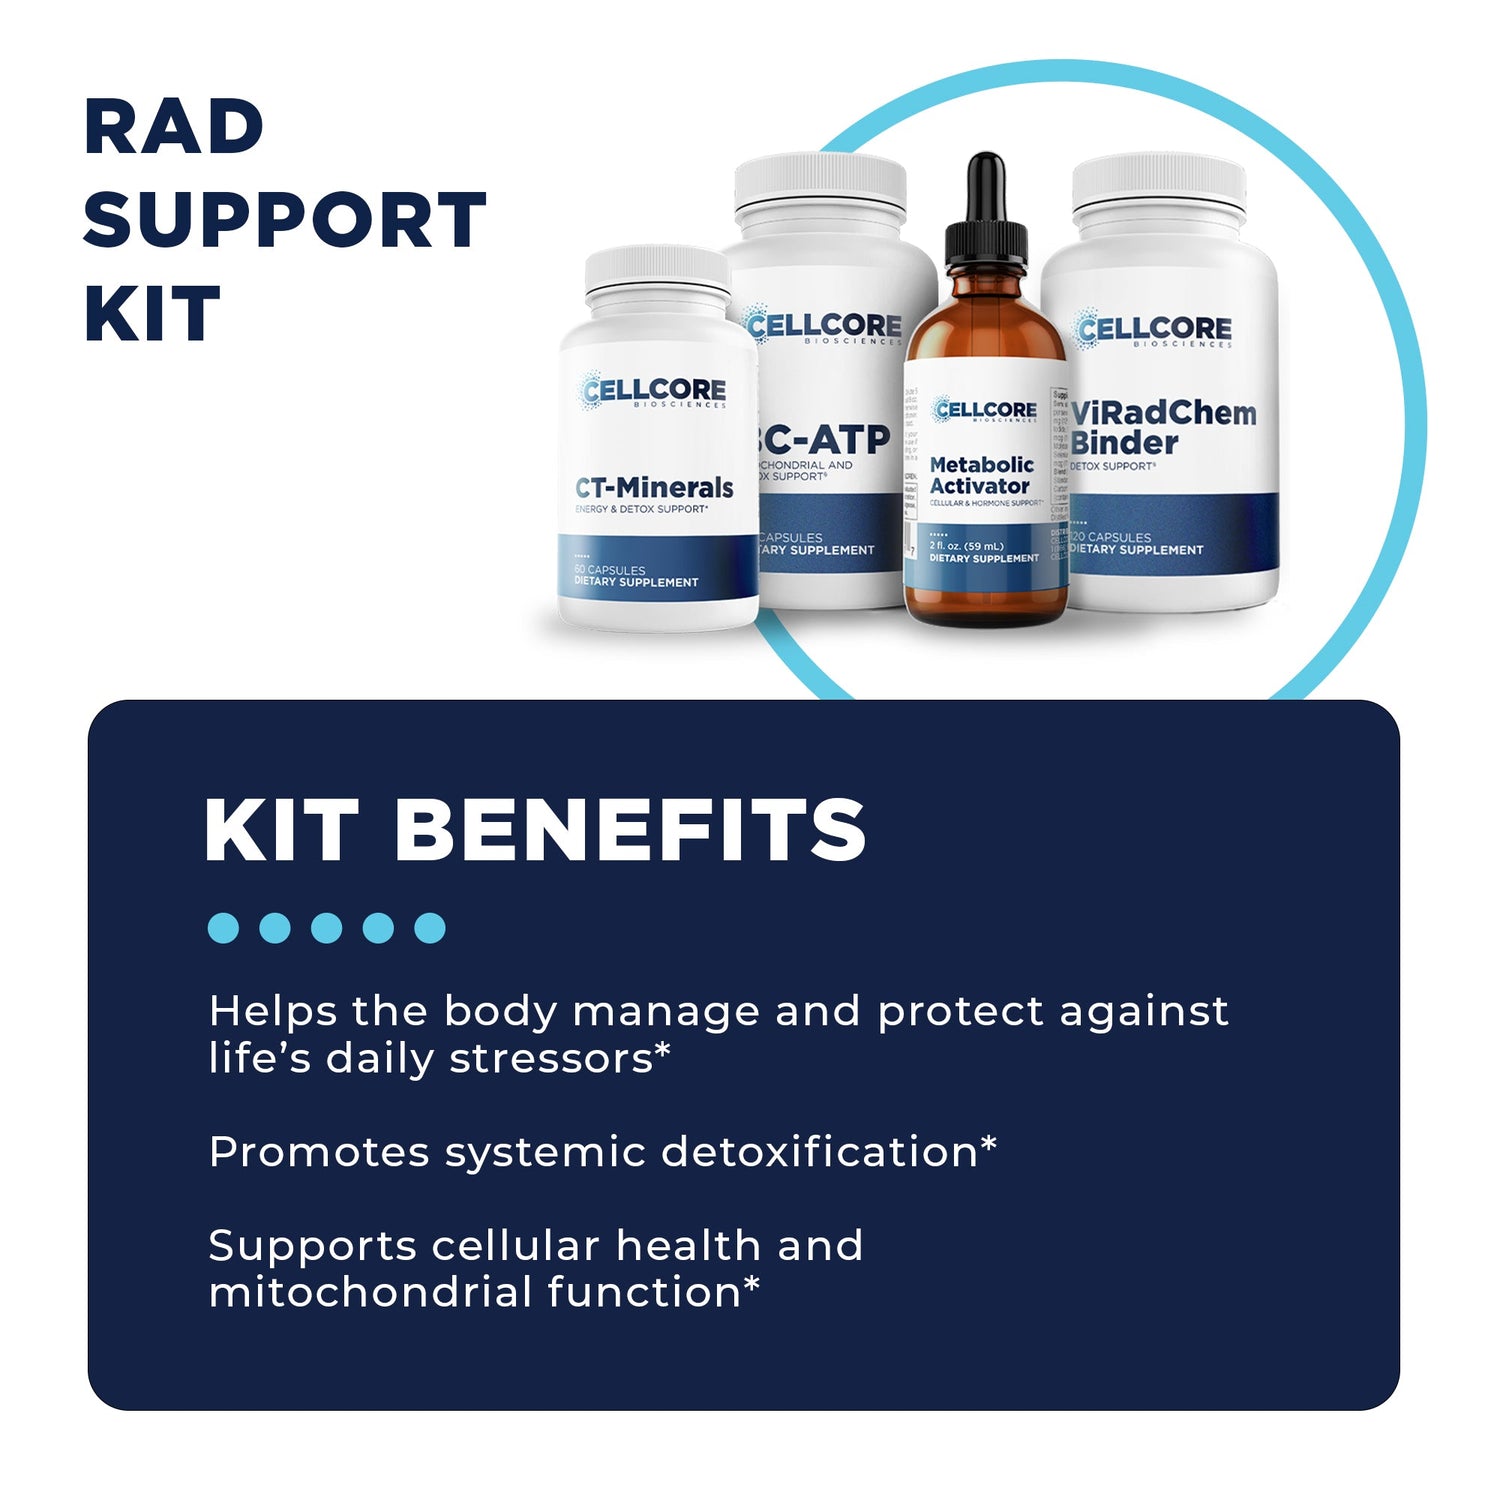 RAD Support Kit Benefits